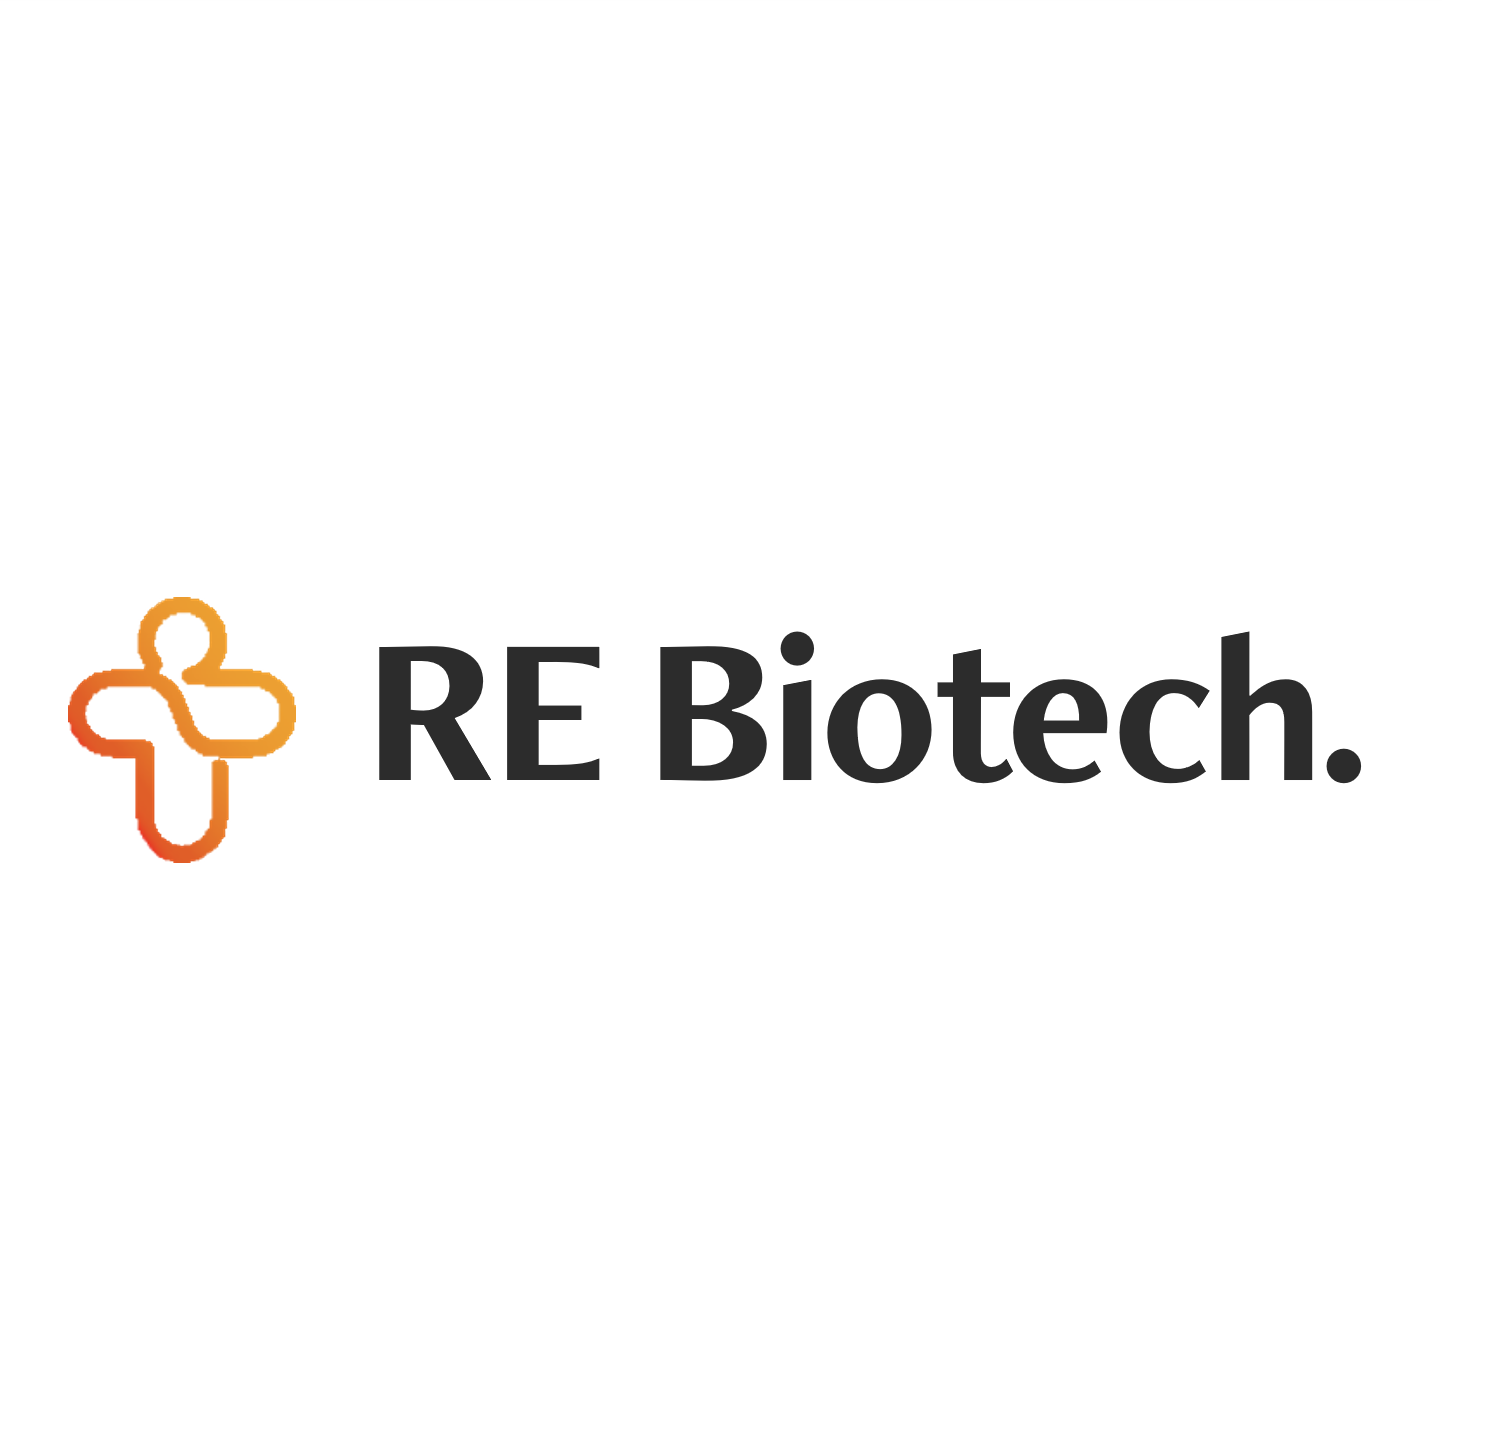 RE Biotech.